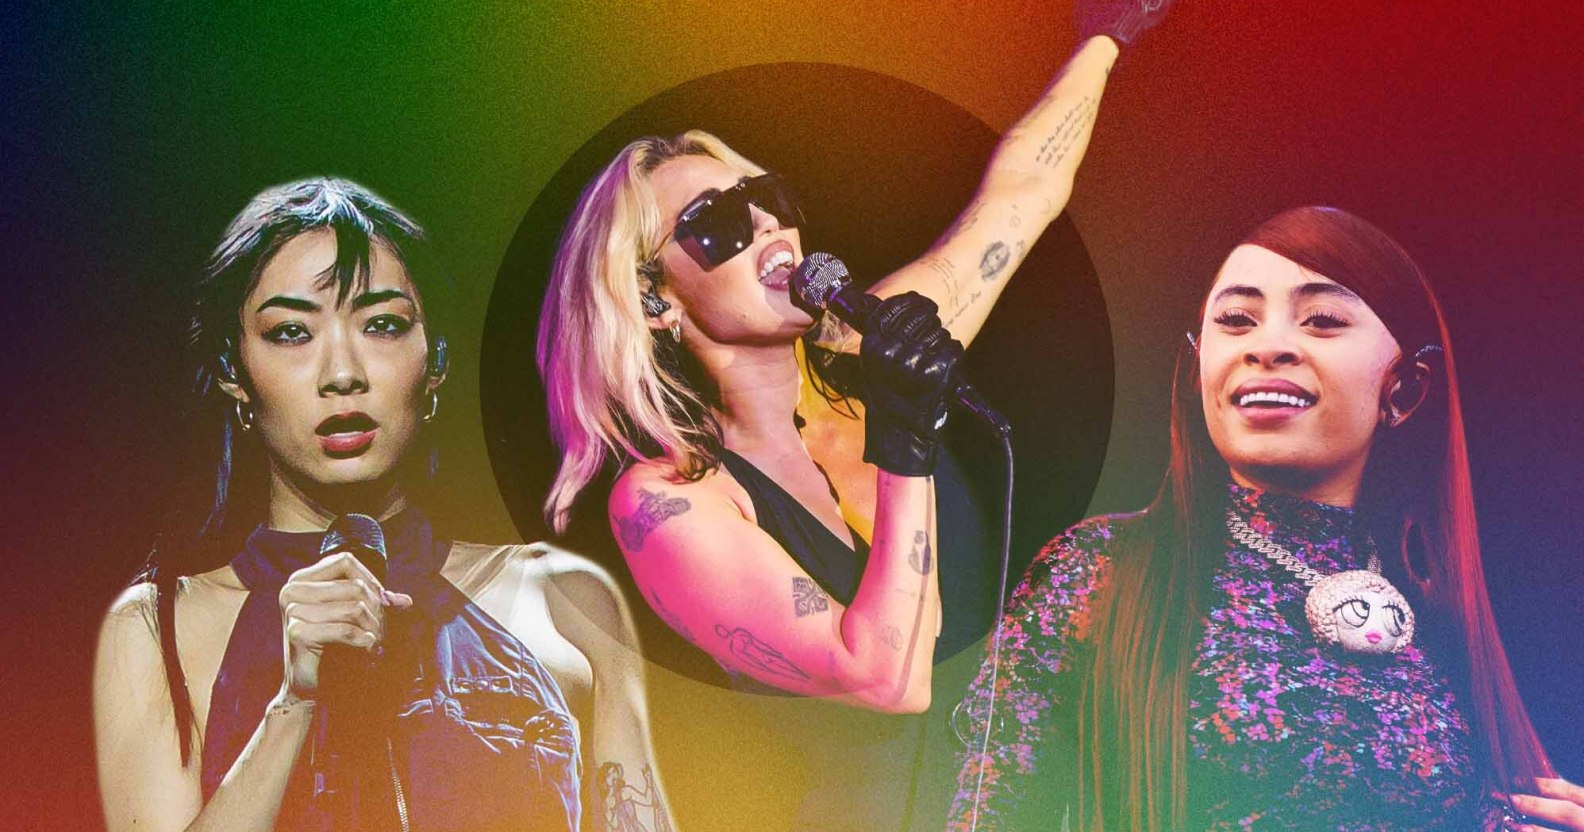 Rina Sawayama, Miley Cyrus and Ice Spice against a rainbow background.